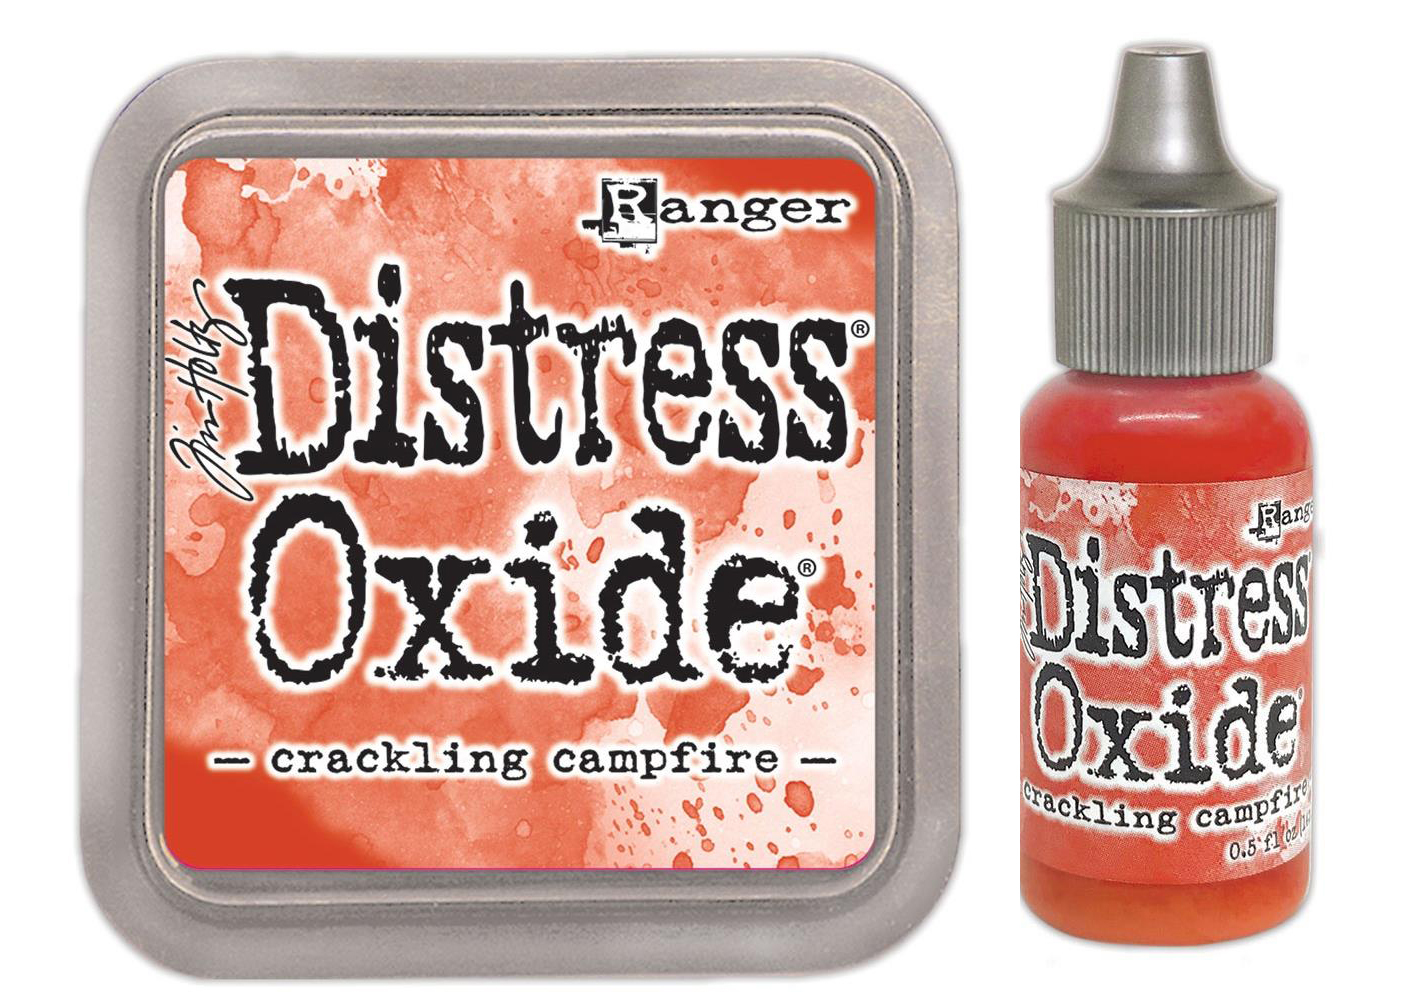 Tim Holtz Distress Oxide Ink Pad + Reinker Crackling Campfire